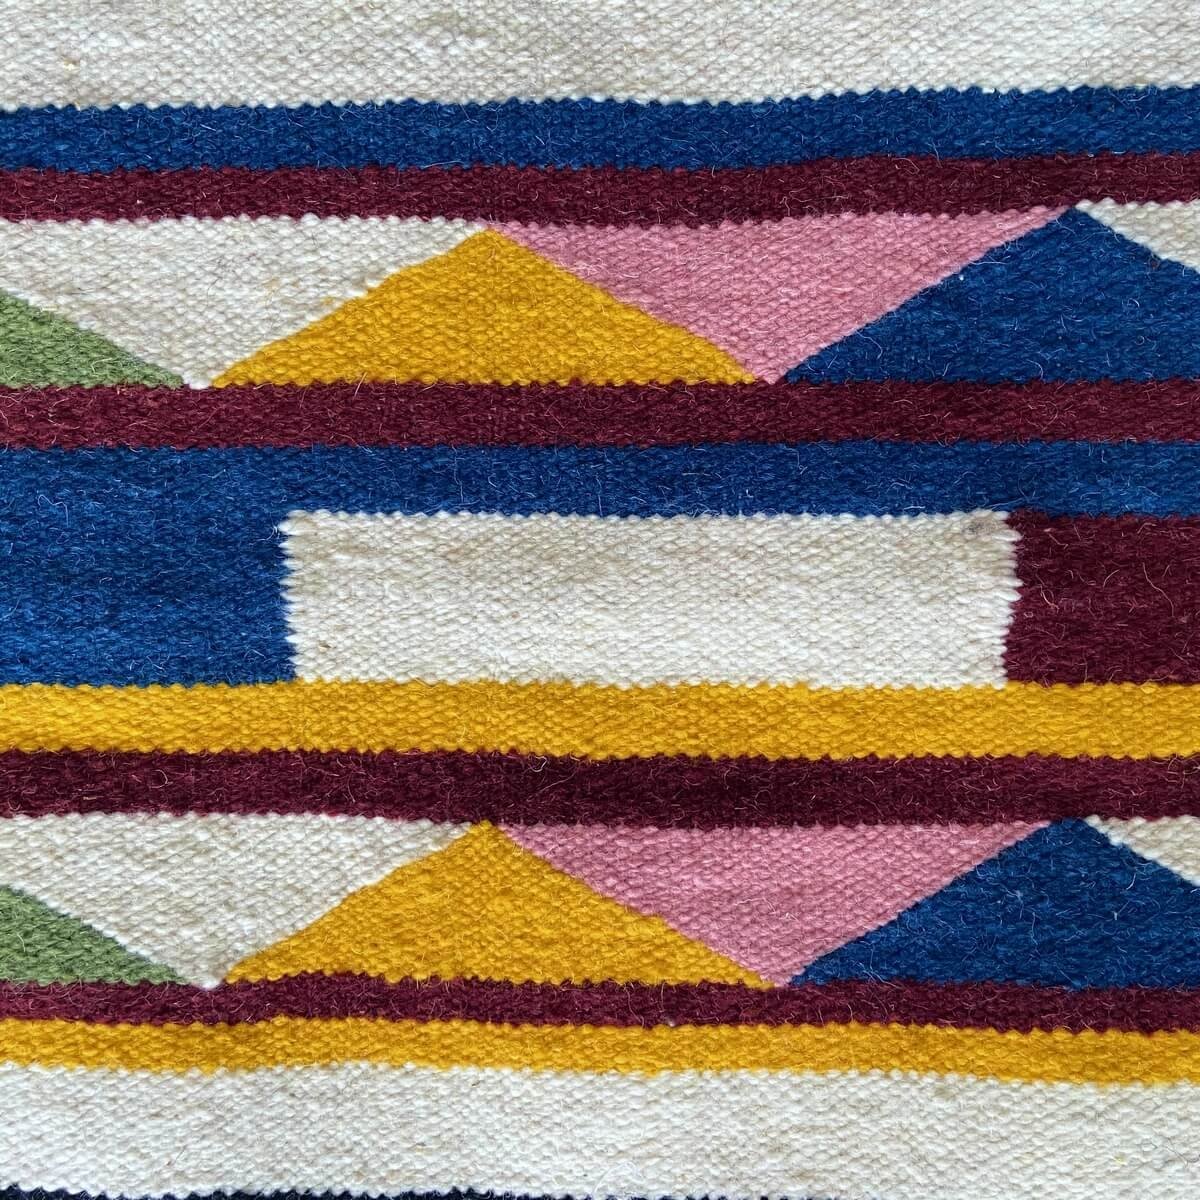 Berber tapijt Tapijt Kilim Orti 65x95 Veelkleurig (Handgeweven, Wol, Tunesië) Tunesisch kilimdeken, Marokkaanse stijl. Rechthoek